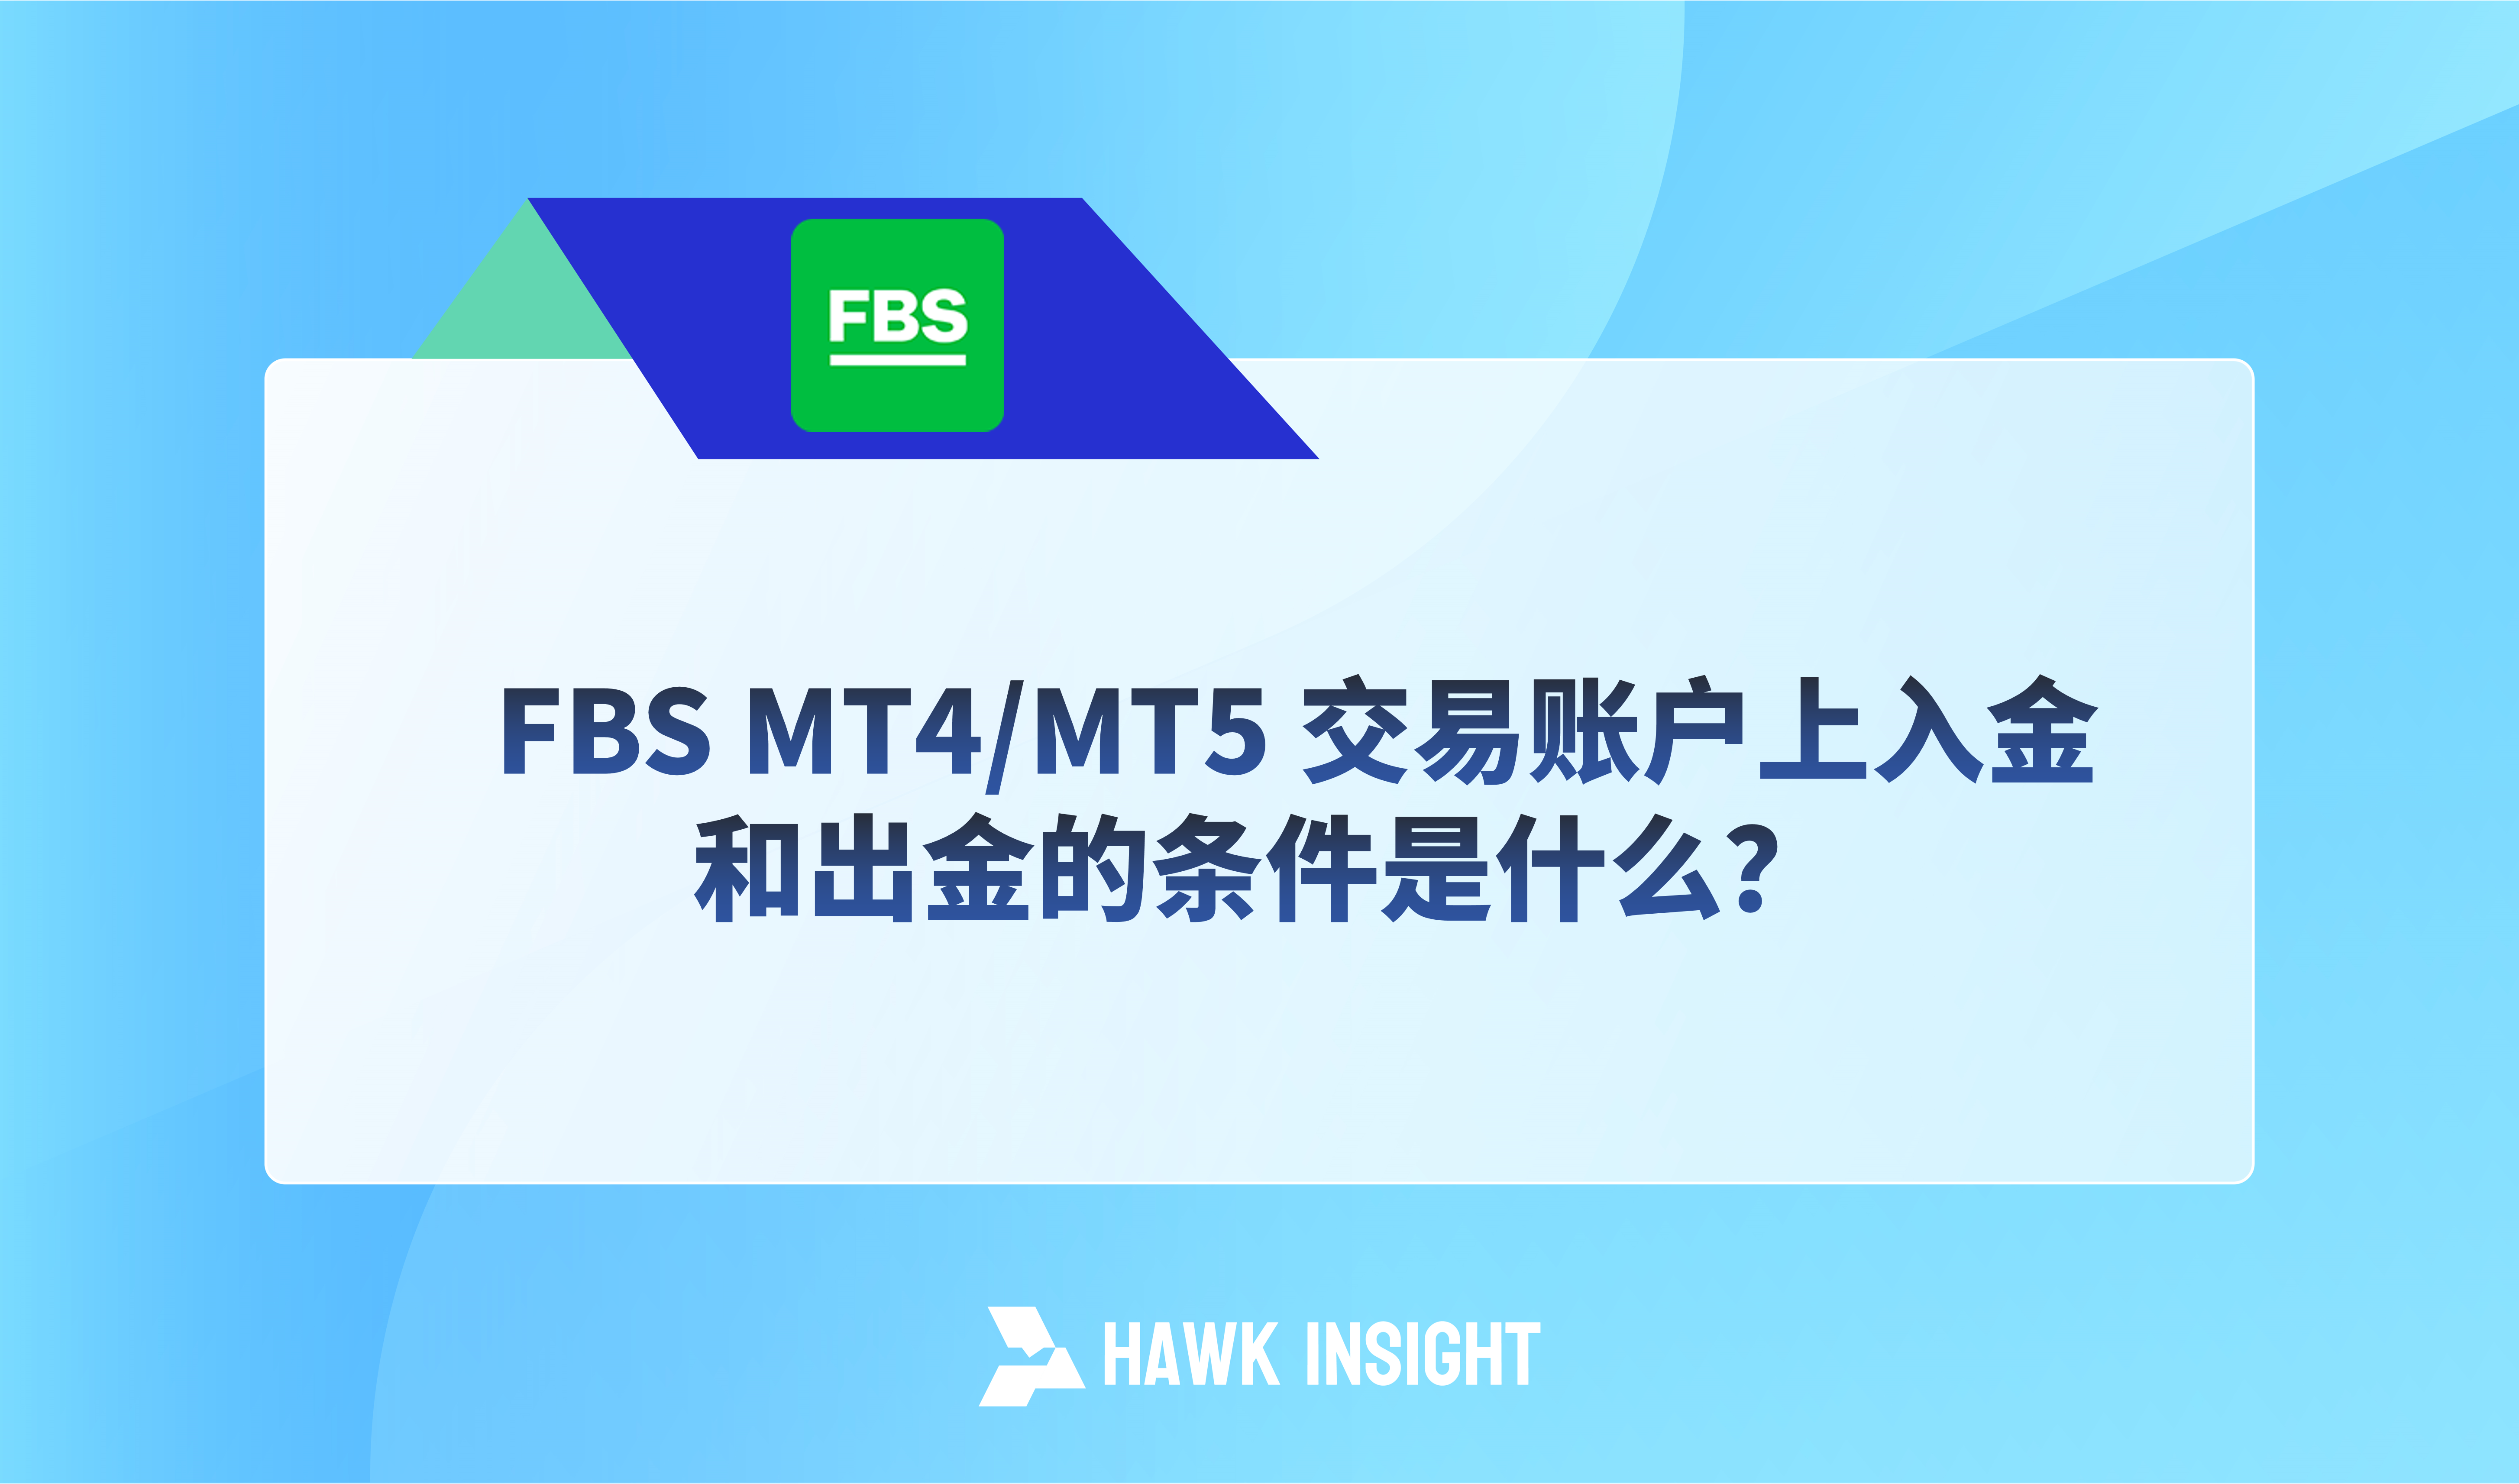 FBS MT4/MT5 交易账户上入金和出金的条件是什么？